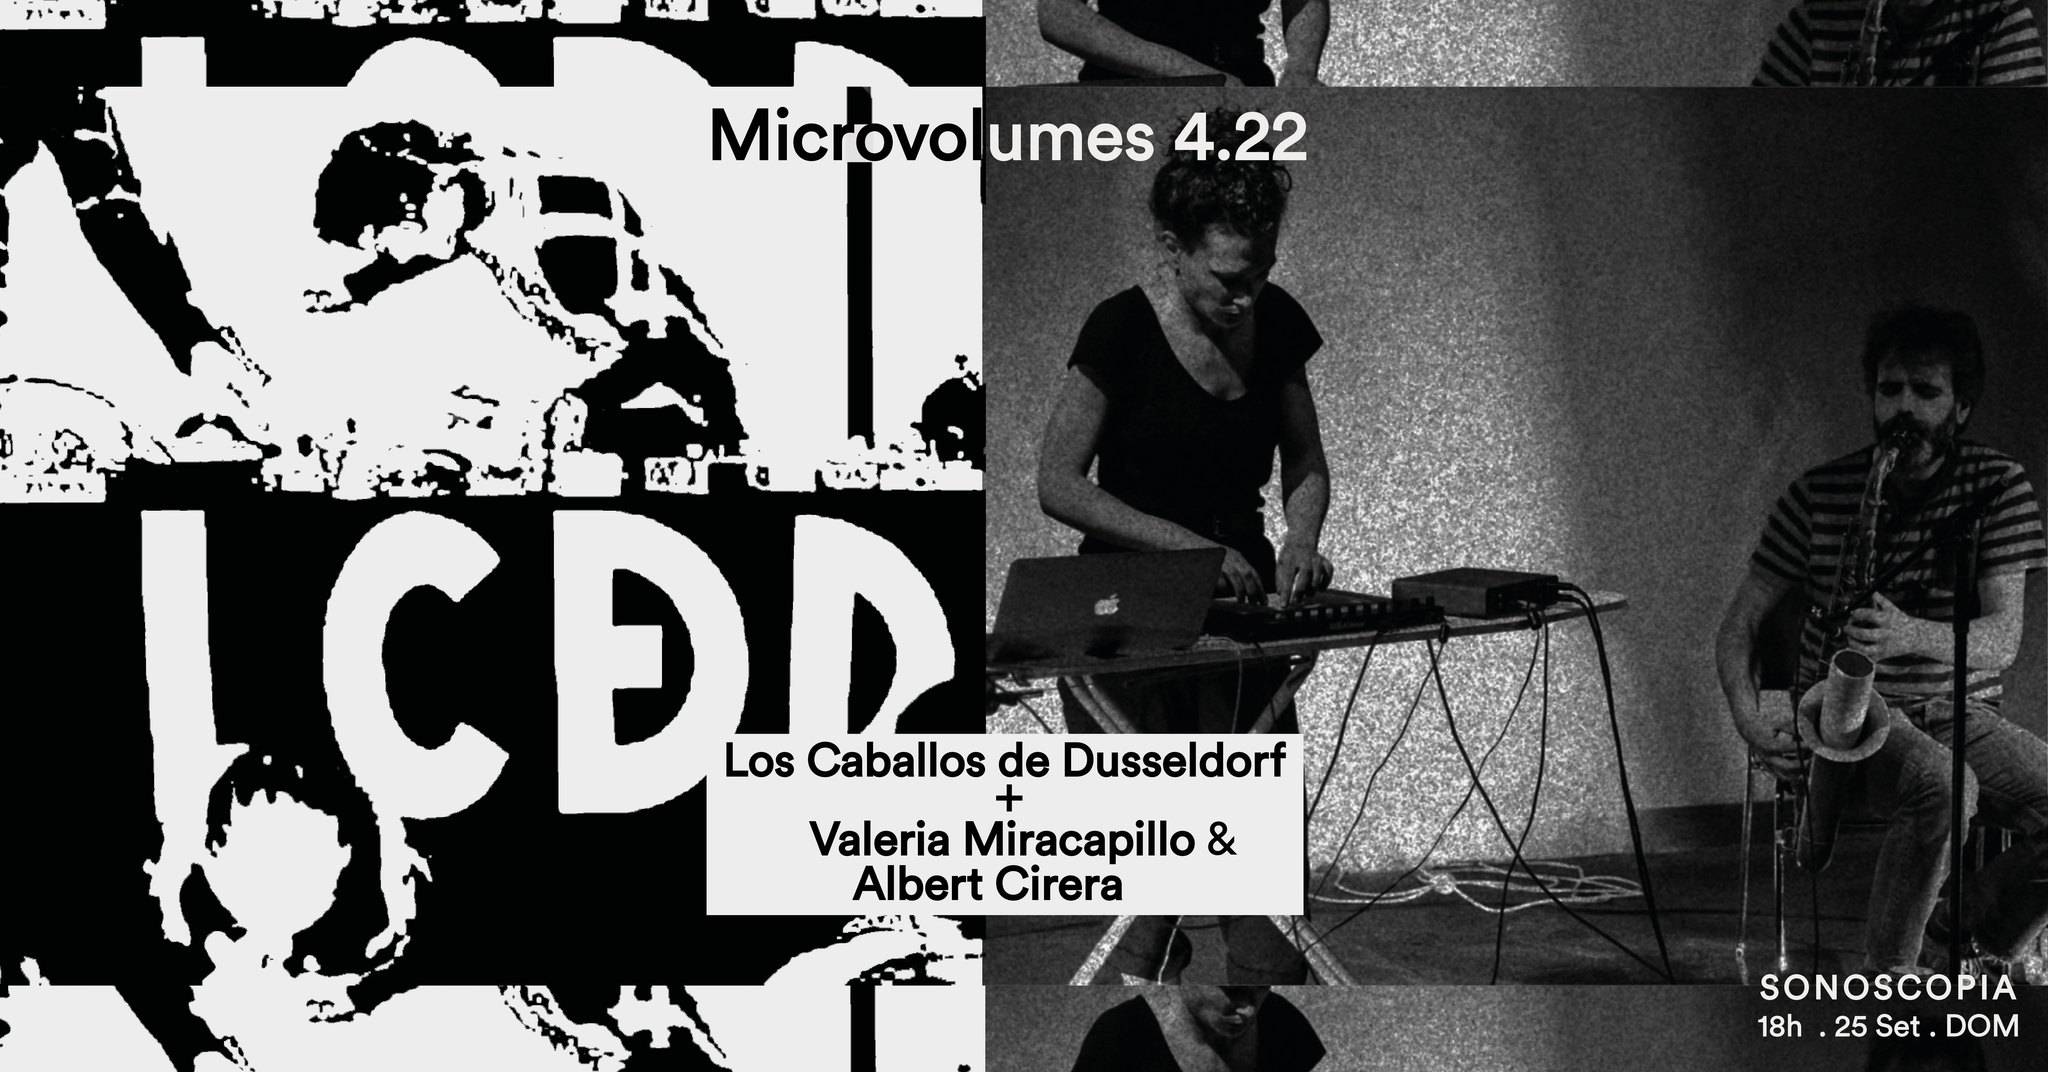 Microvolumes 4.22 Valeria Miracapillo & Albert Cirera Los Caballos de Dusseldorf